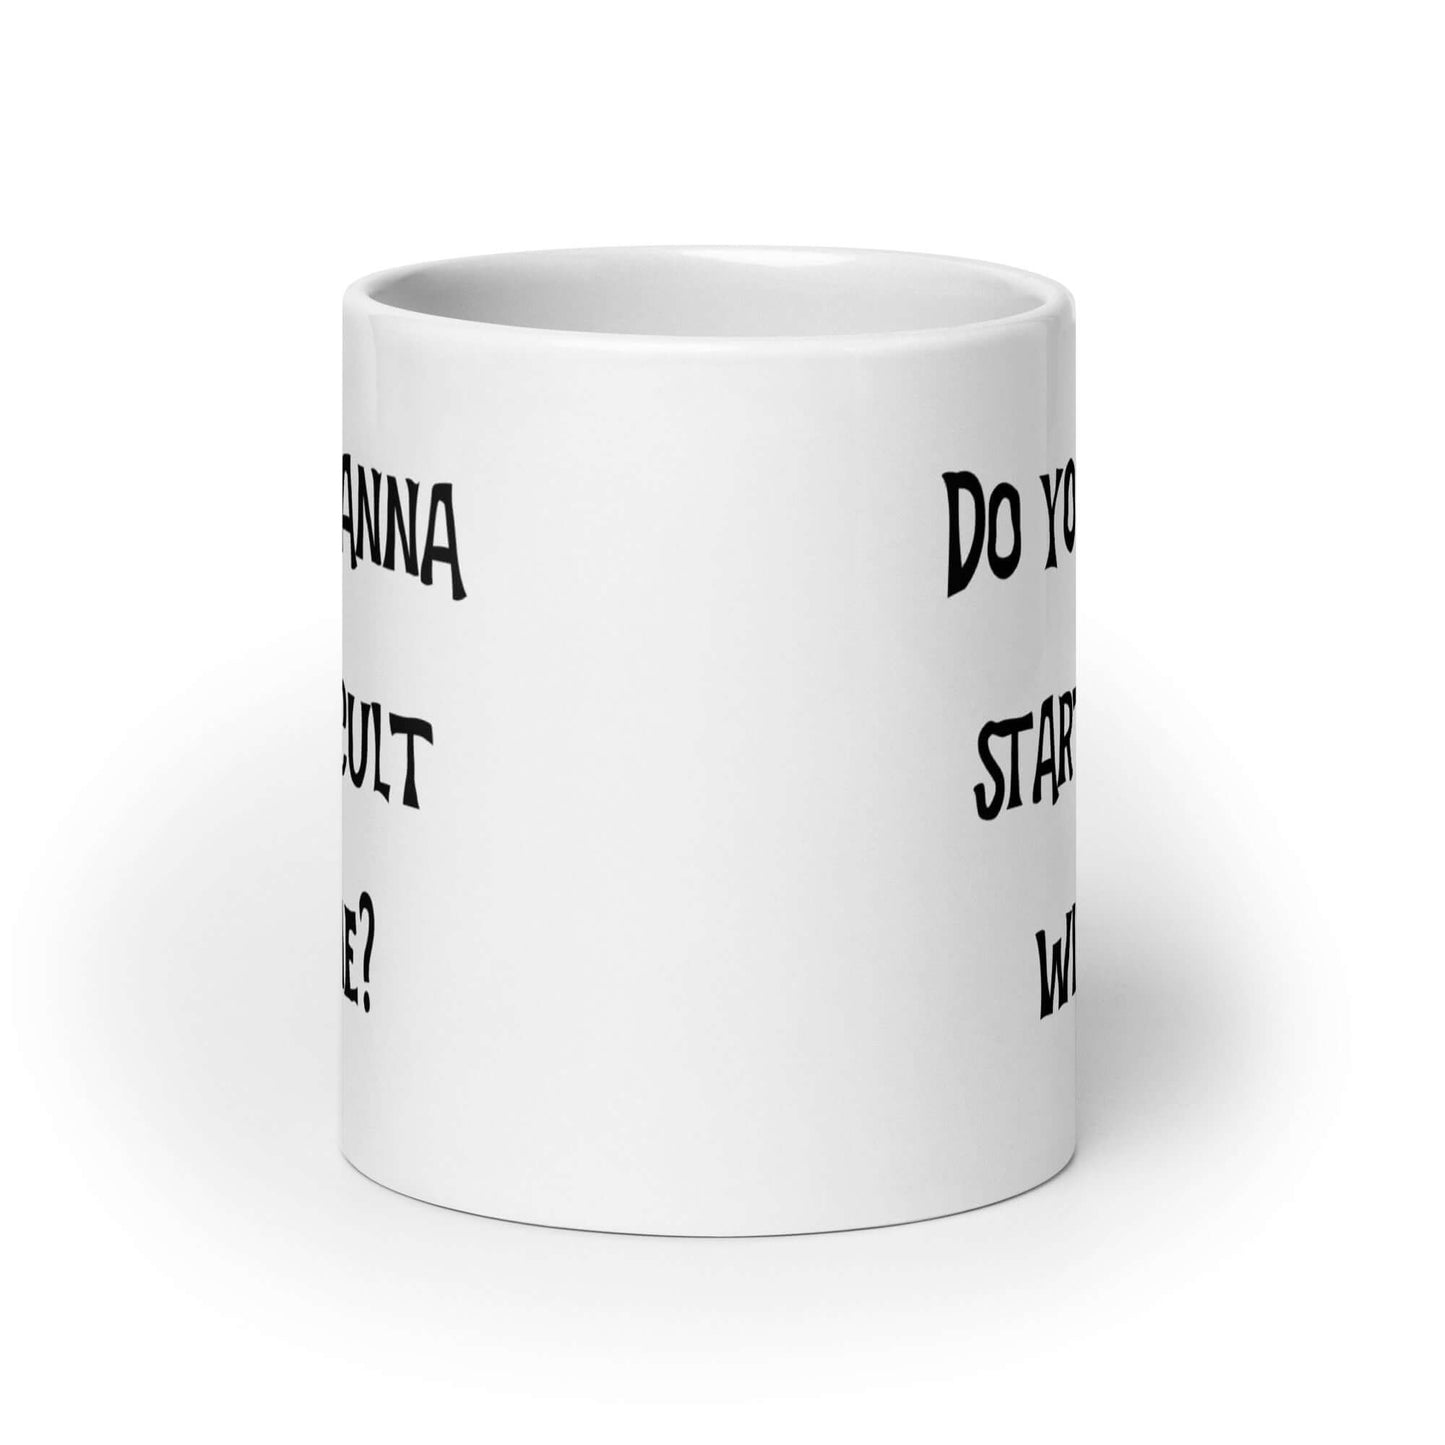 Cult humor ceramic mug. Do you wanna start a cult with me?